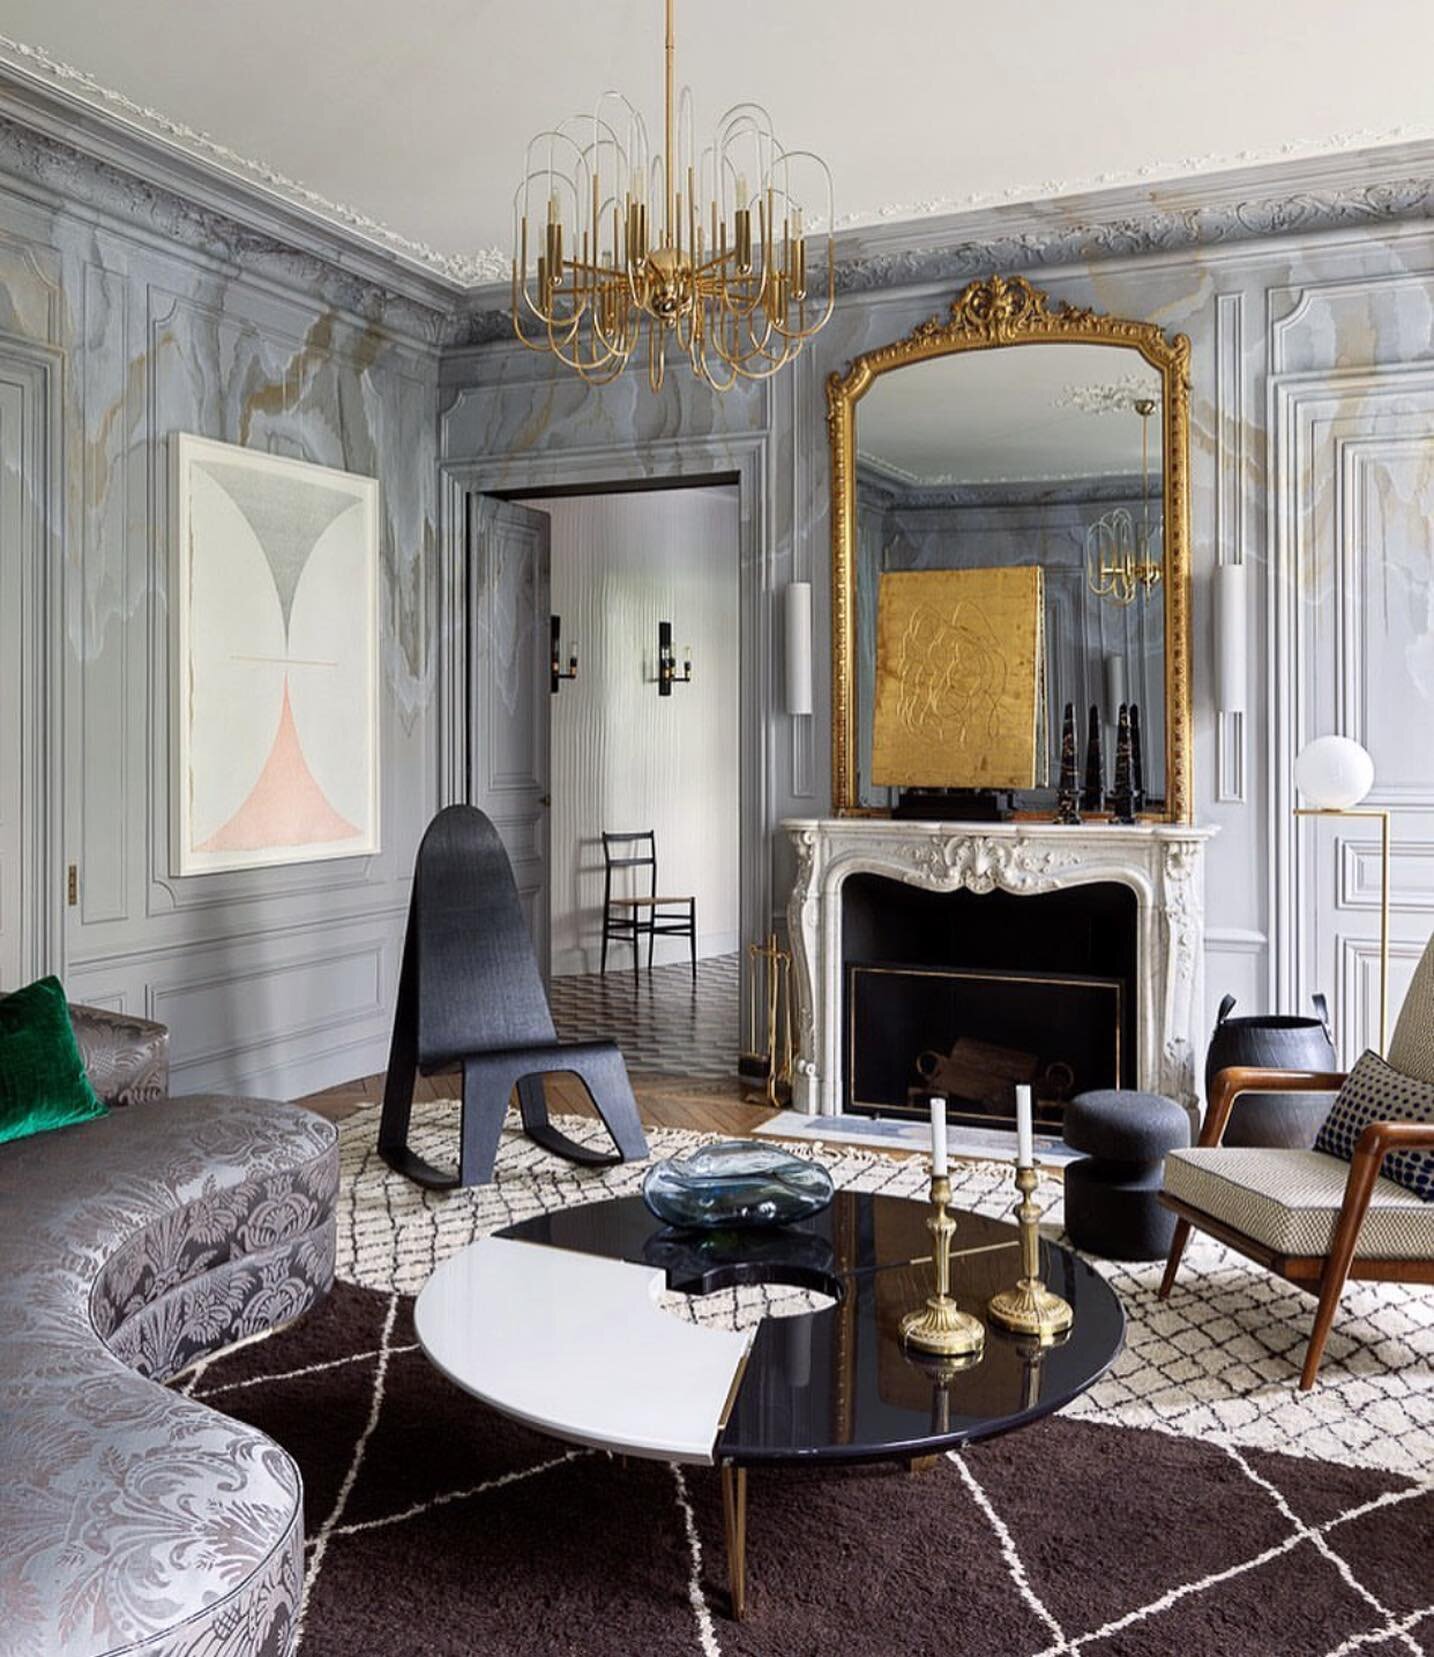 Splendid living room decor in a Parisian apartment decorated by @jeanlouisdeniot 
📸: @stephanjulliard
⠀ 
#jeanlouisdeniot #stephenjulliardphotography #interiorinspiration #interiordesignnyc #apartmentdesign #nycapartmentdesign #parisianstyle